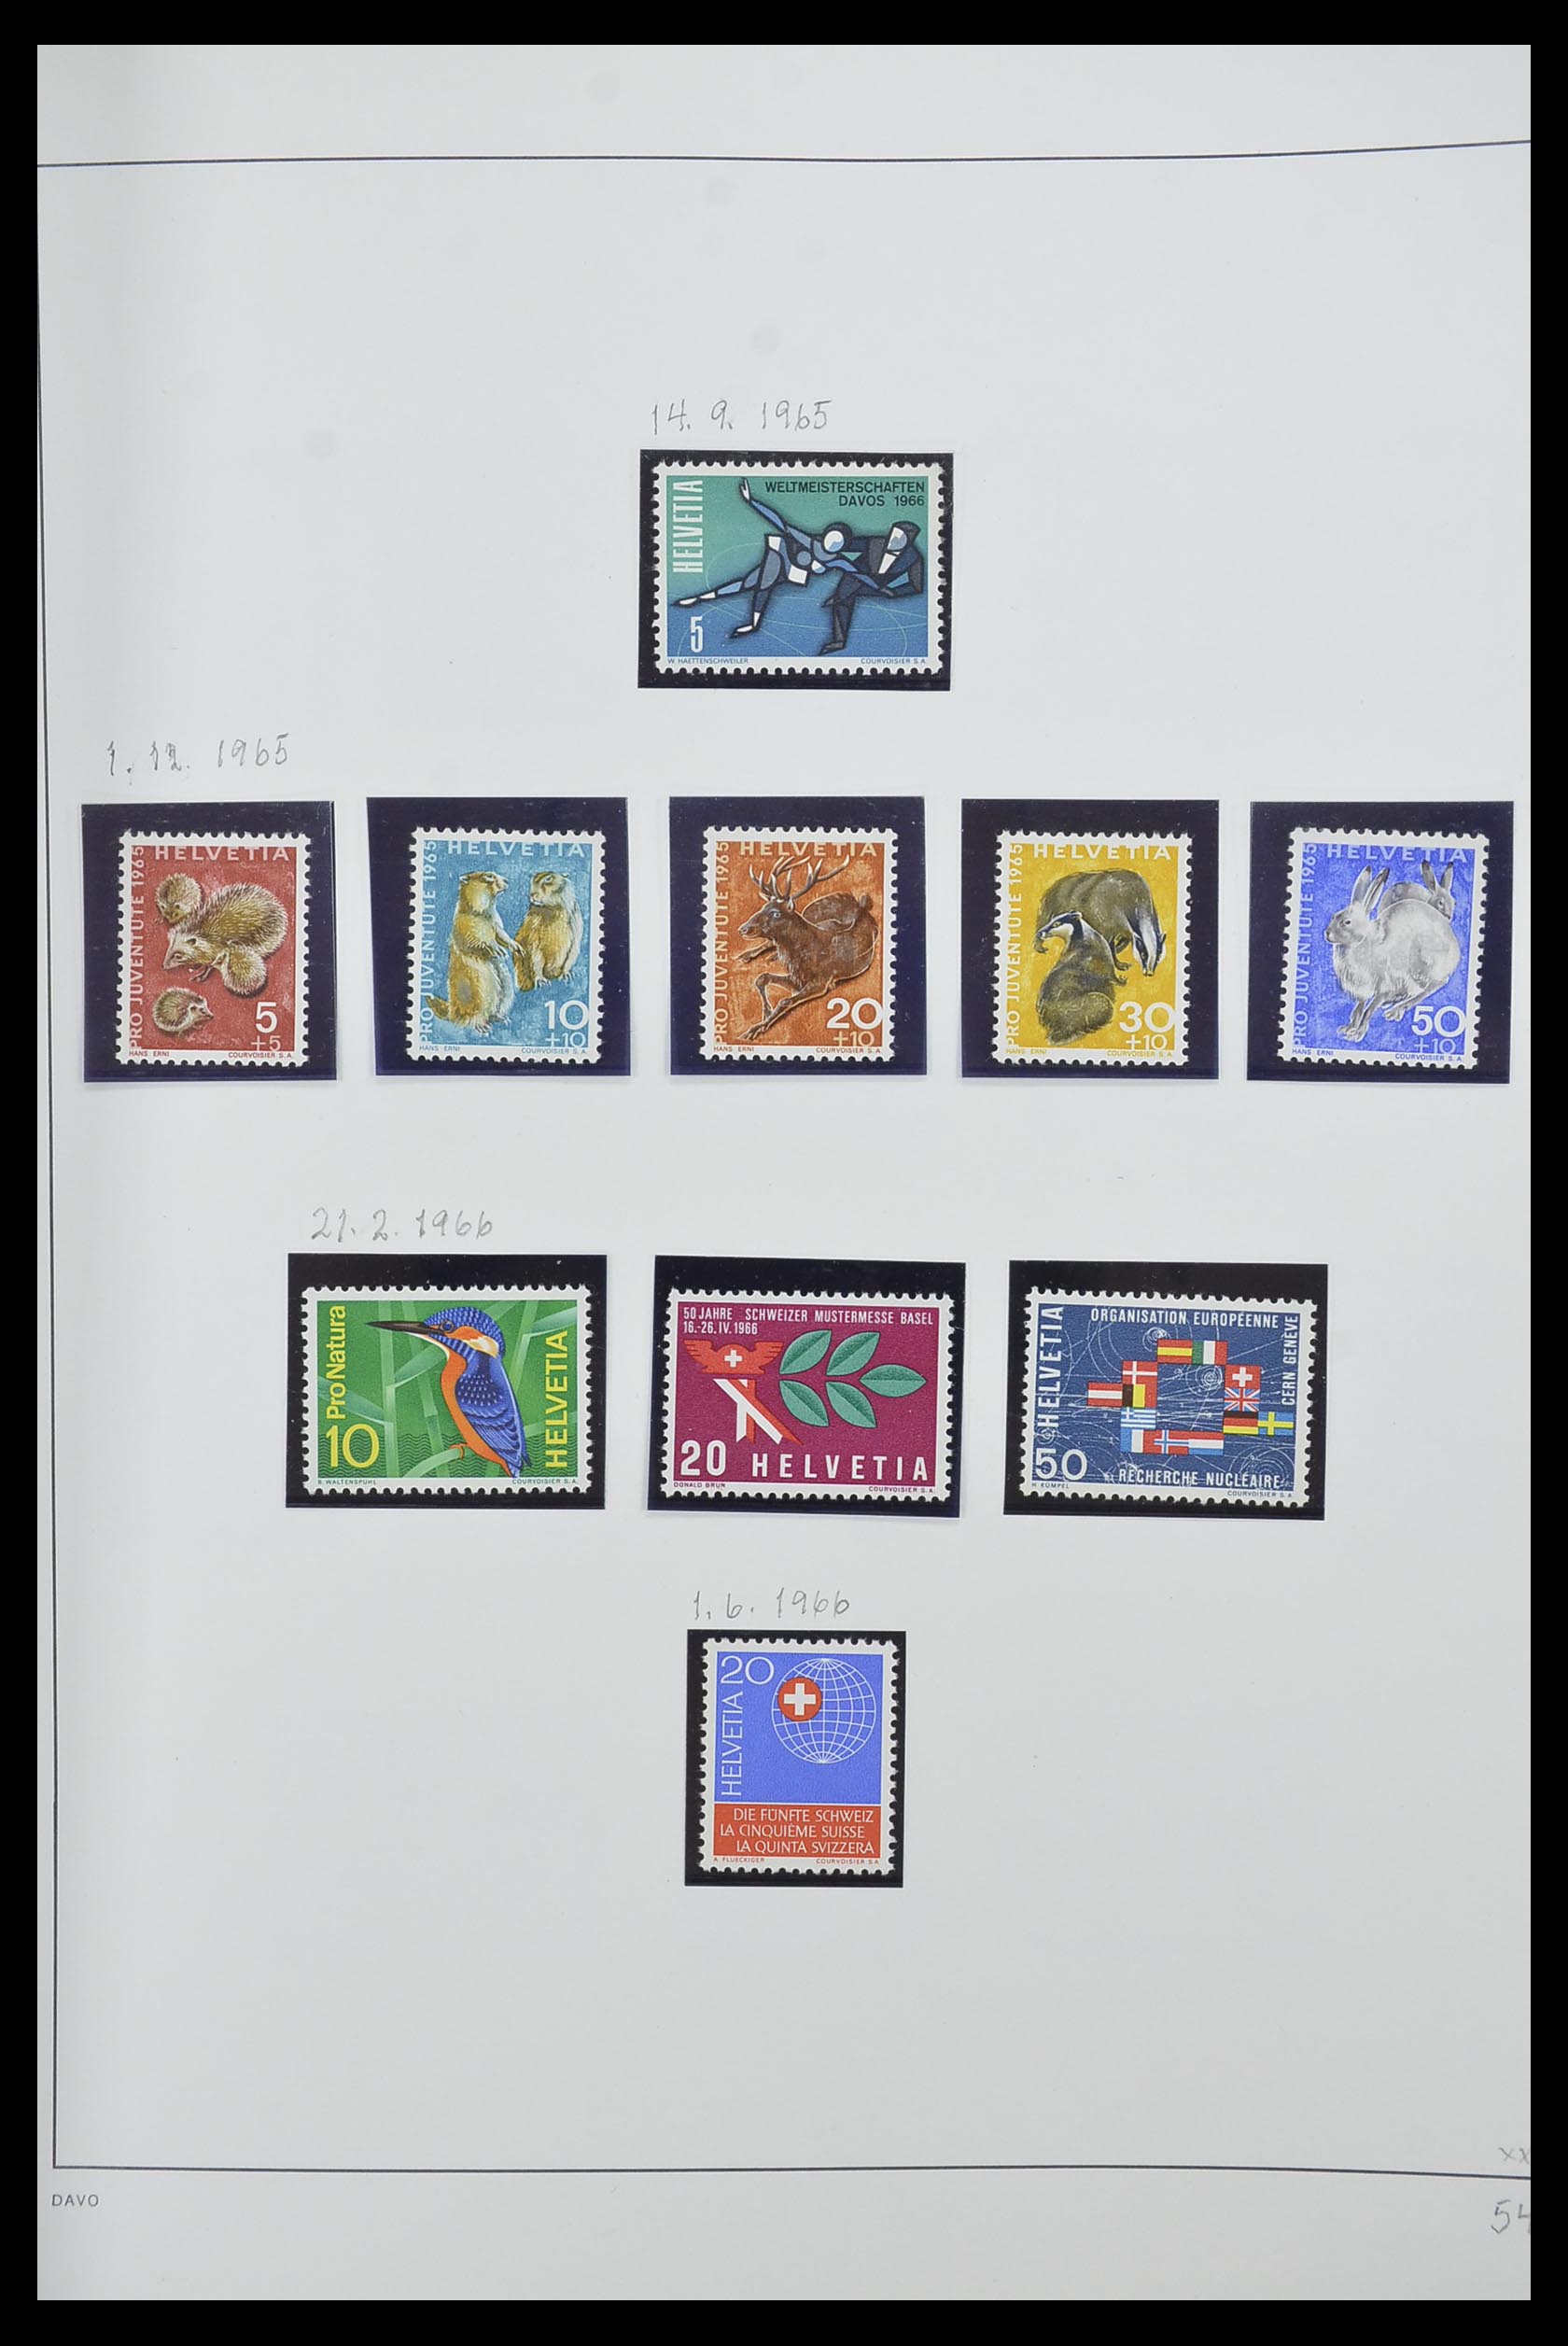 33556 054 - Stamp collection 33556 Switzerland 1862-2000.